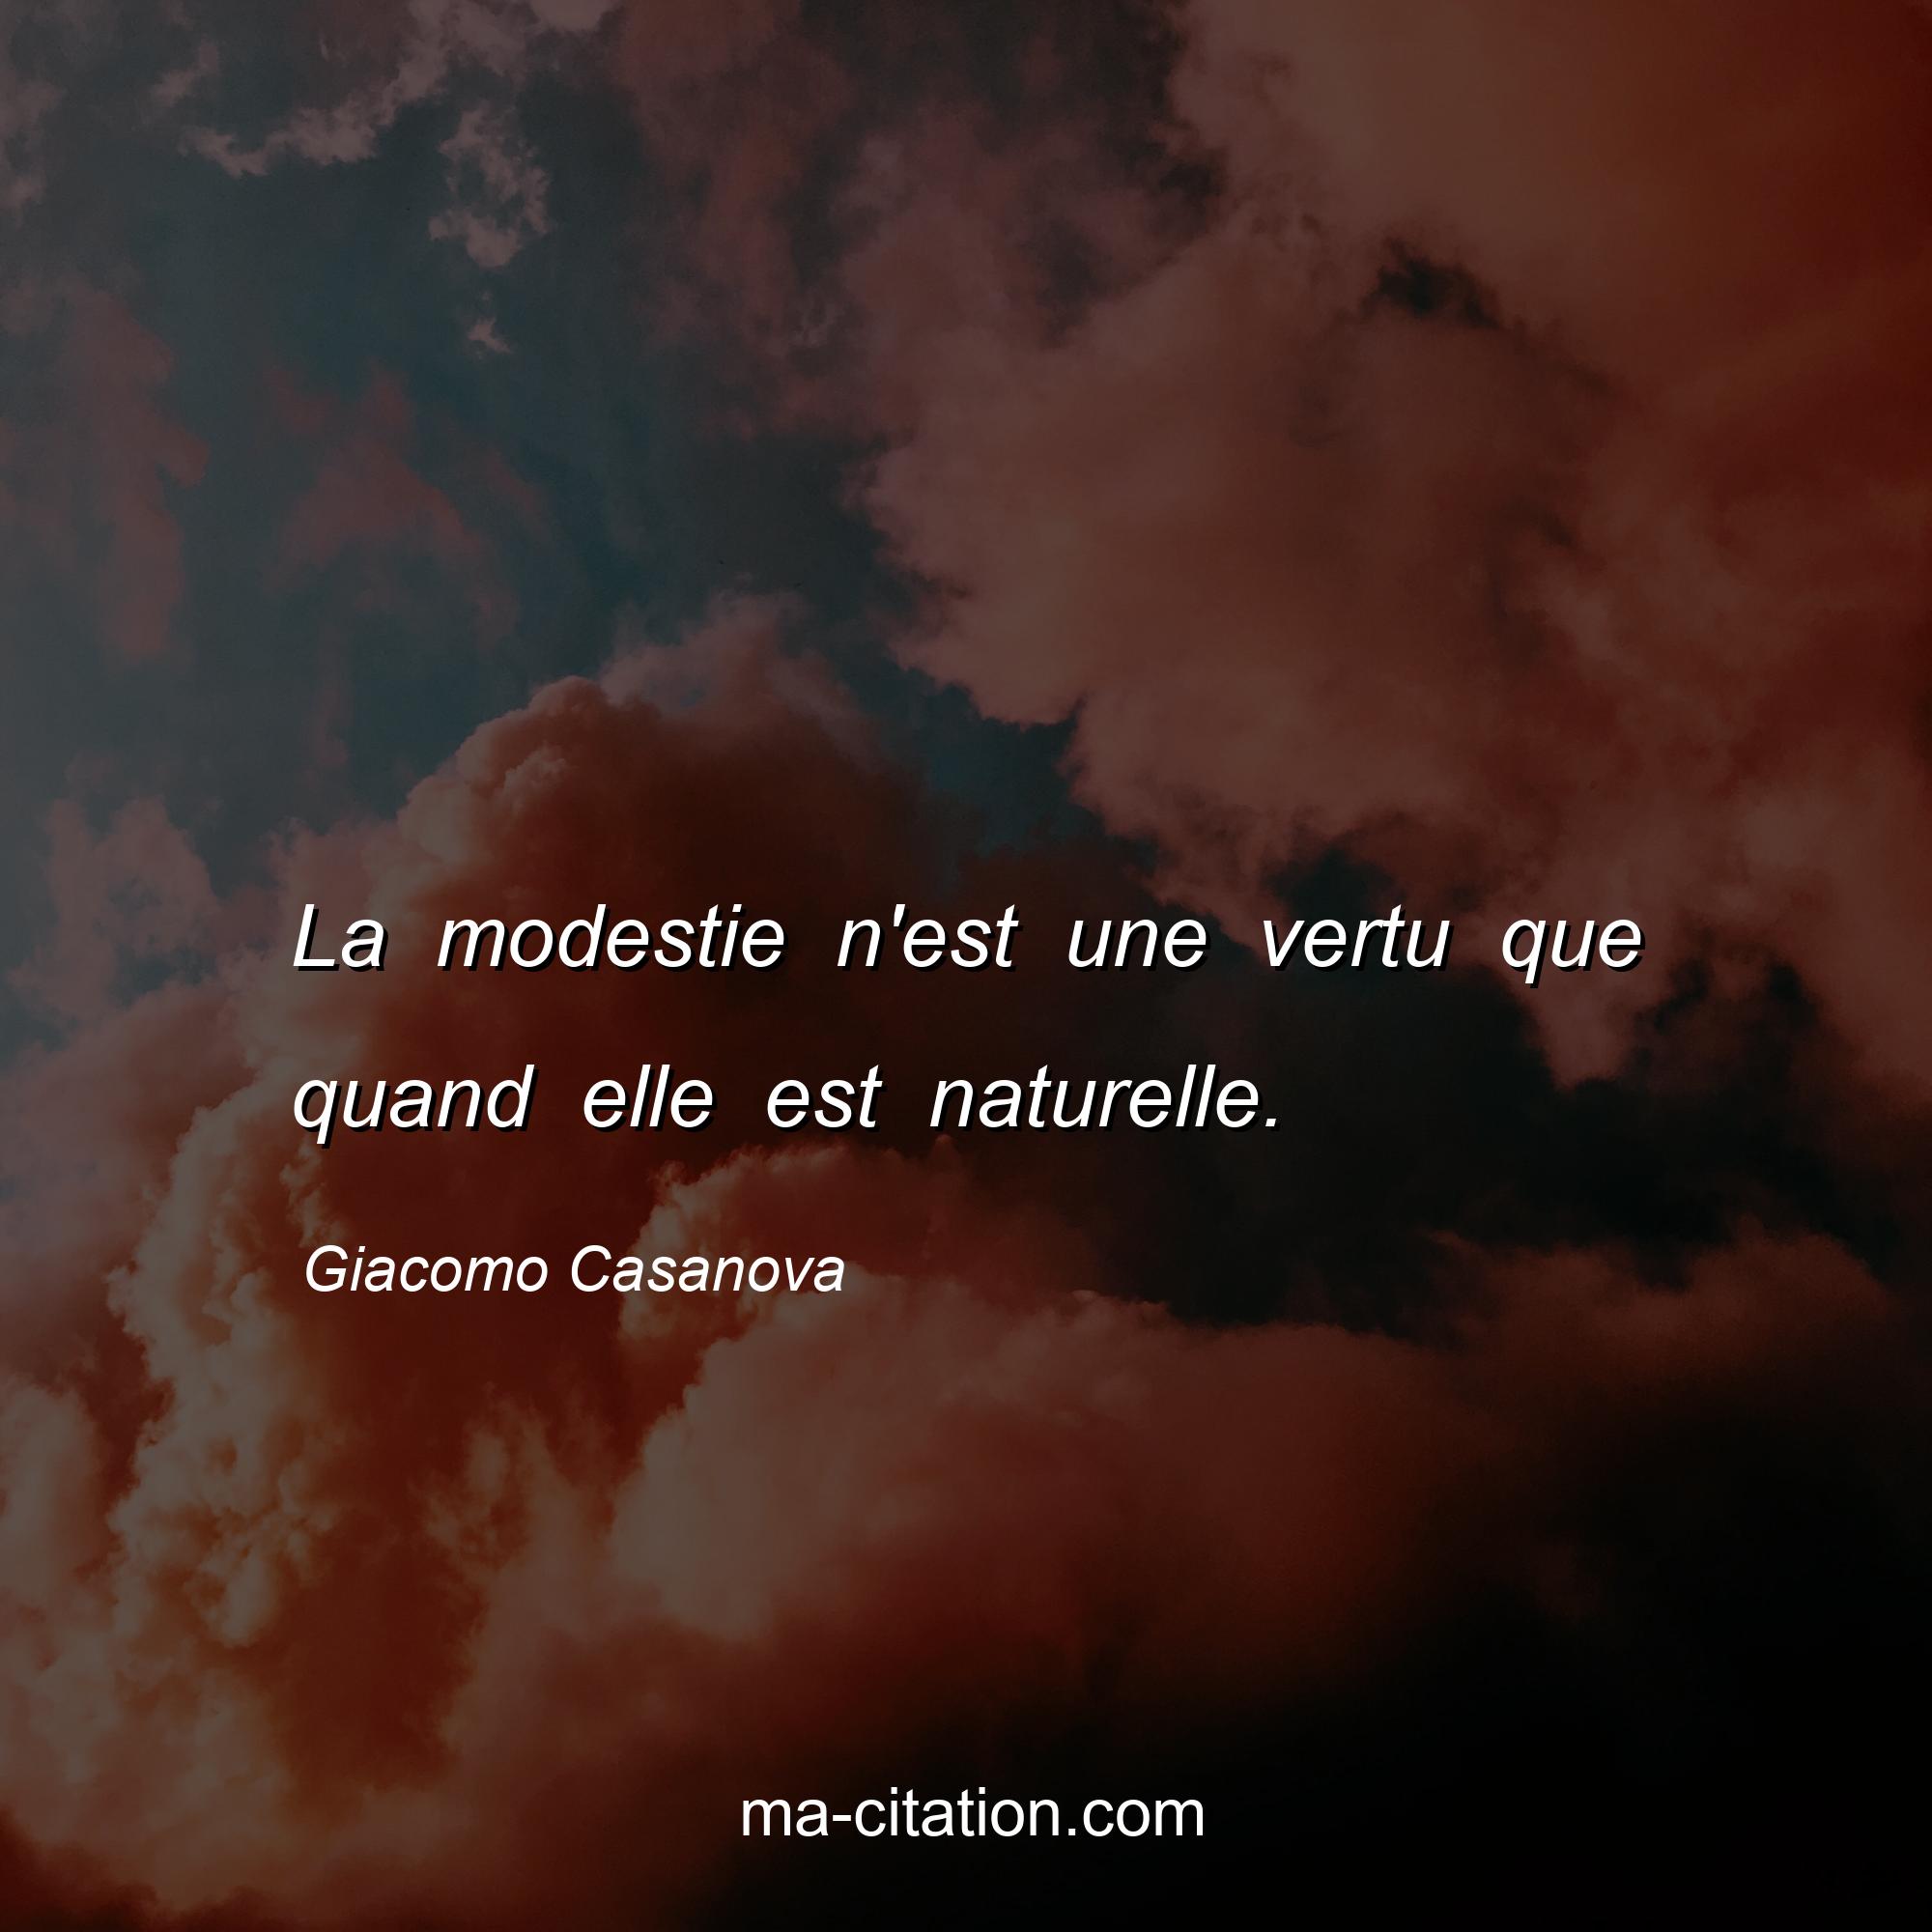 Giacomo Casanova : La modestie n'est une vertu que quand elle est naturelle.